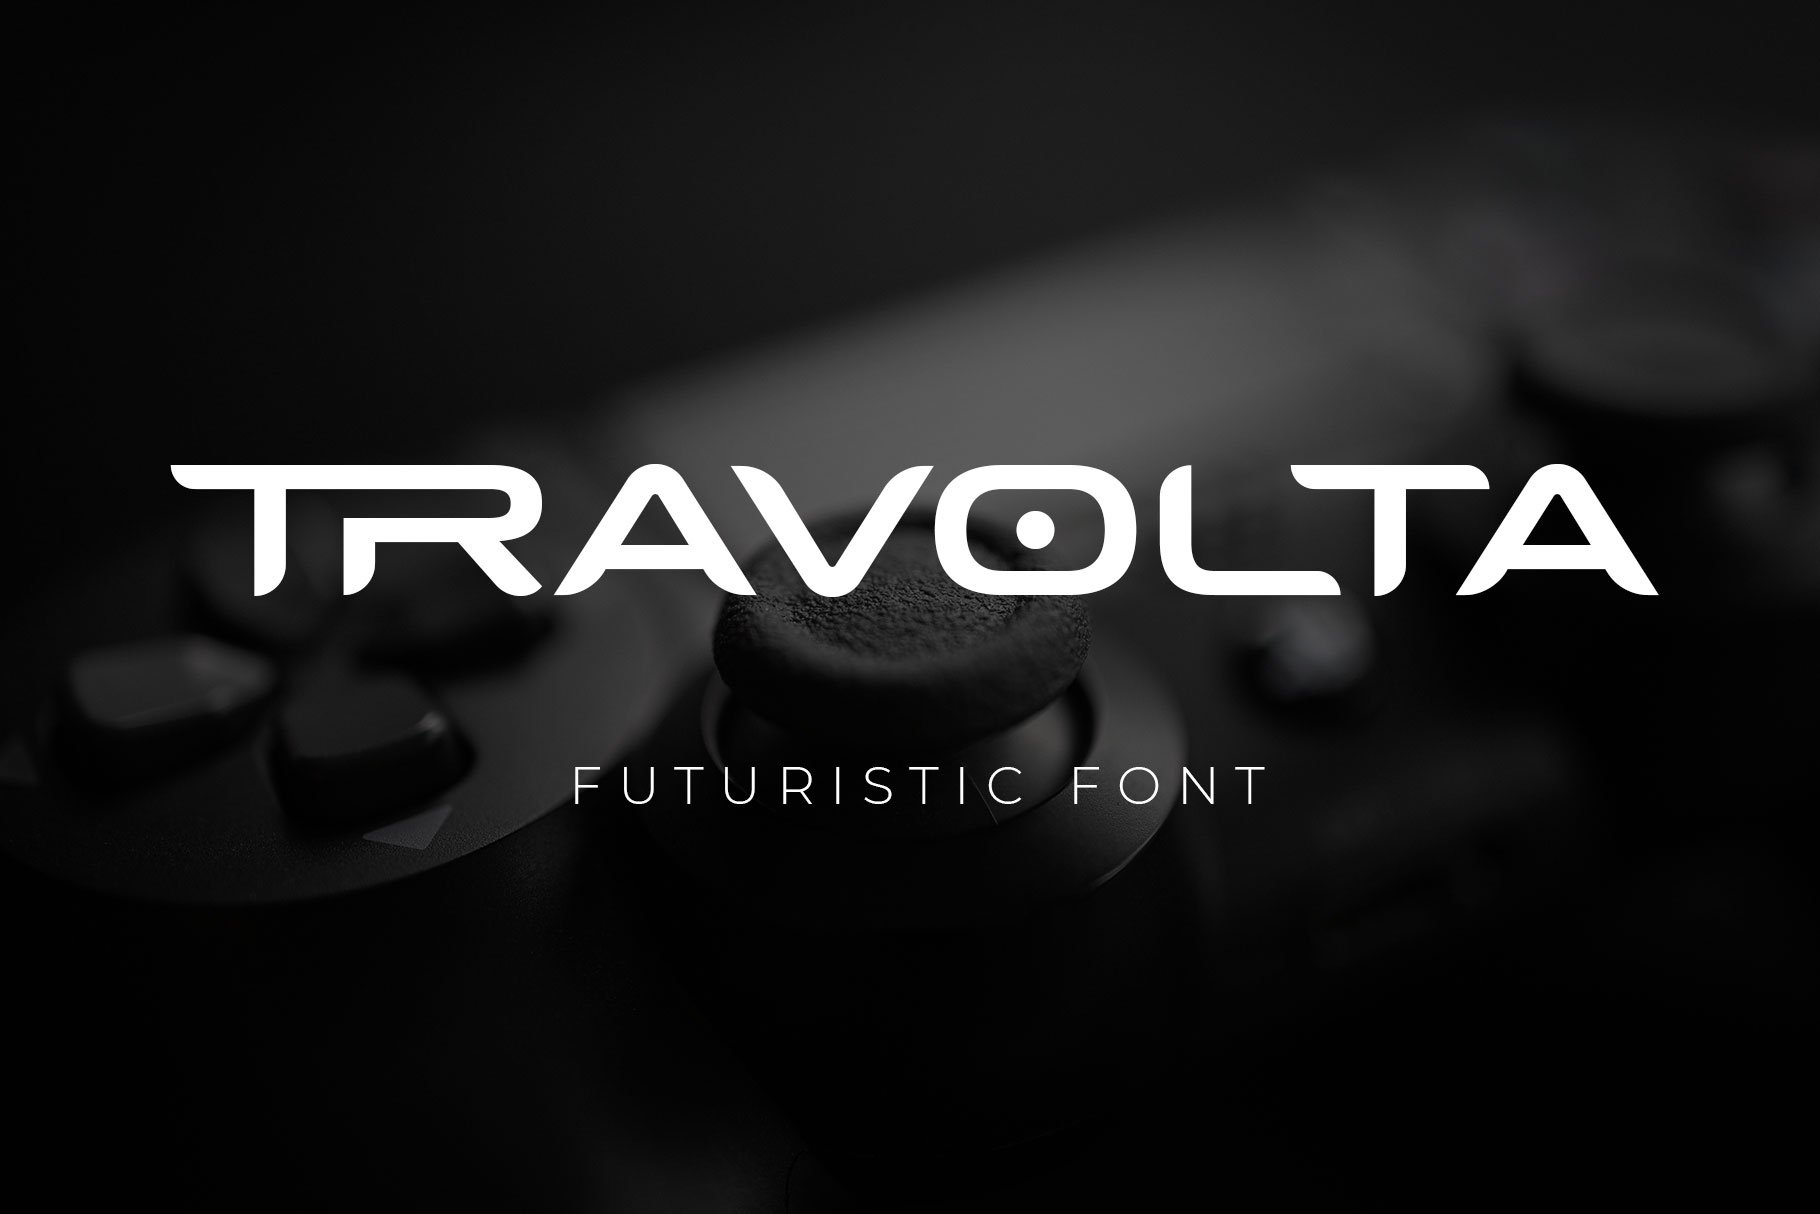 Travolta - Futuristic Font cover image.